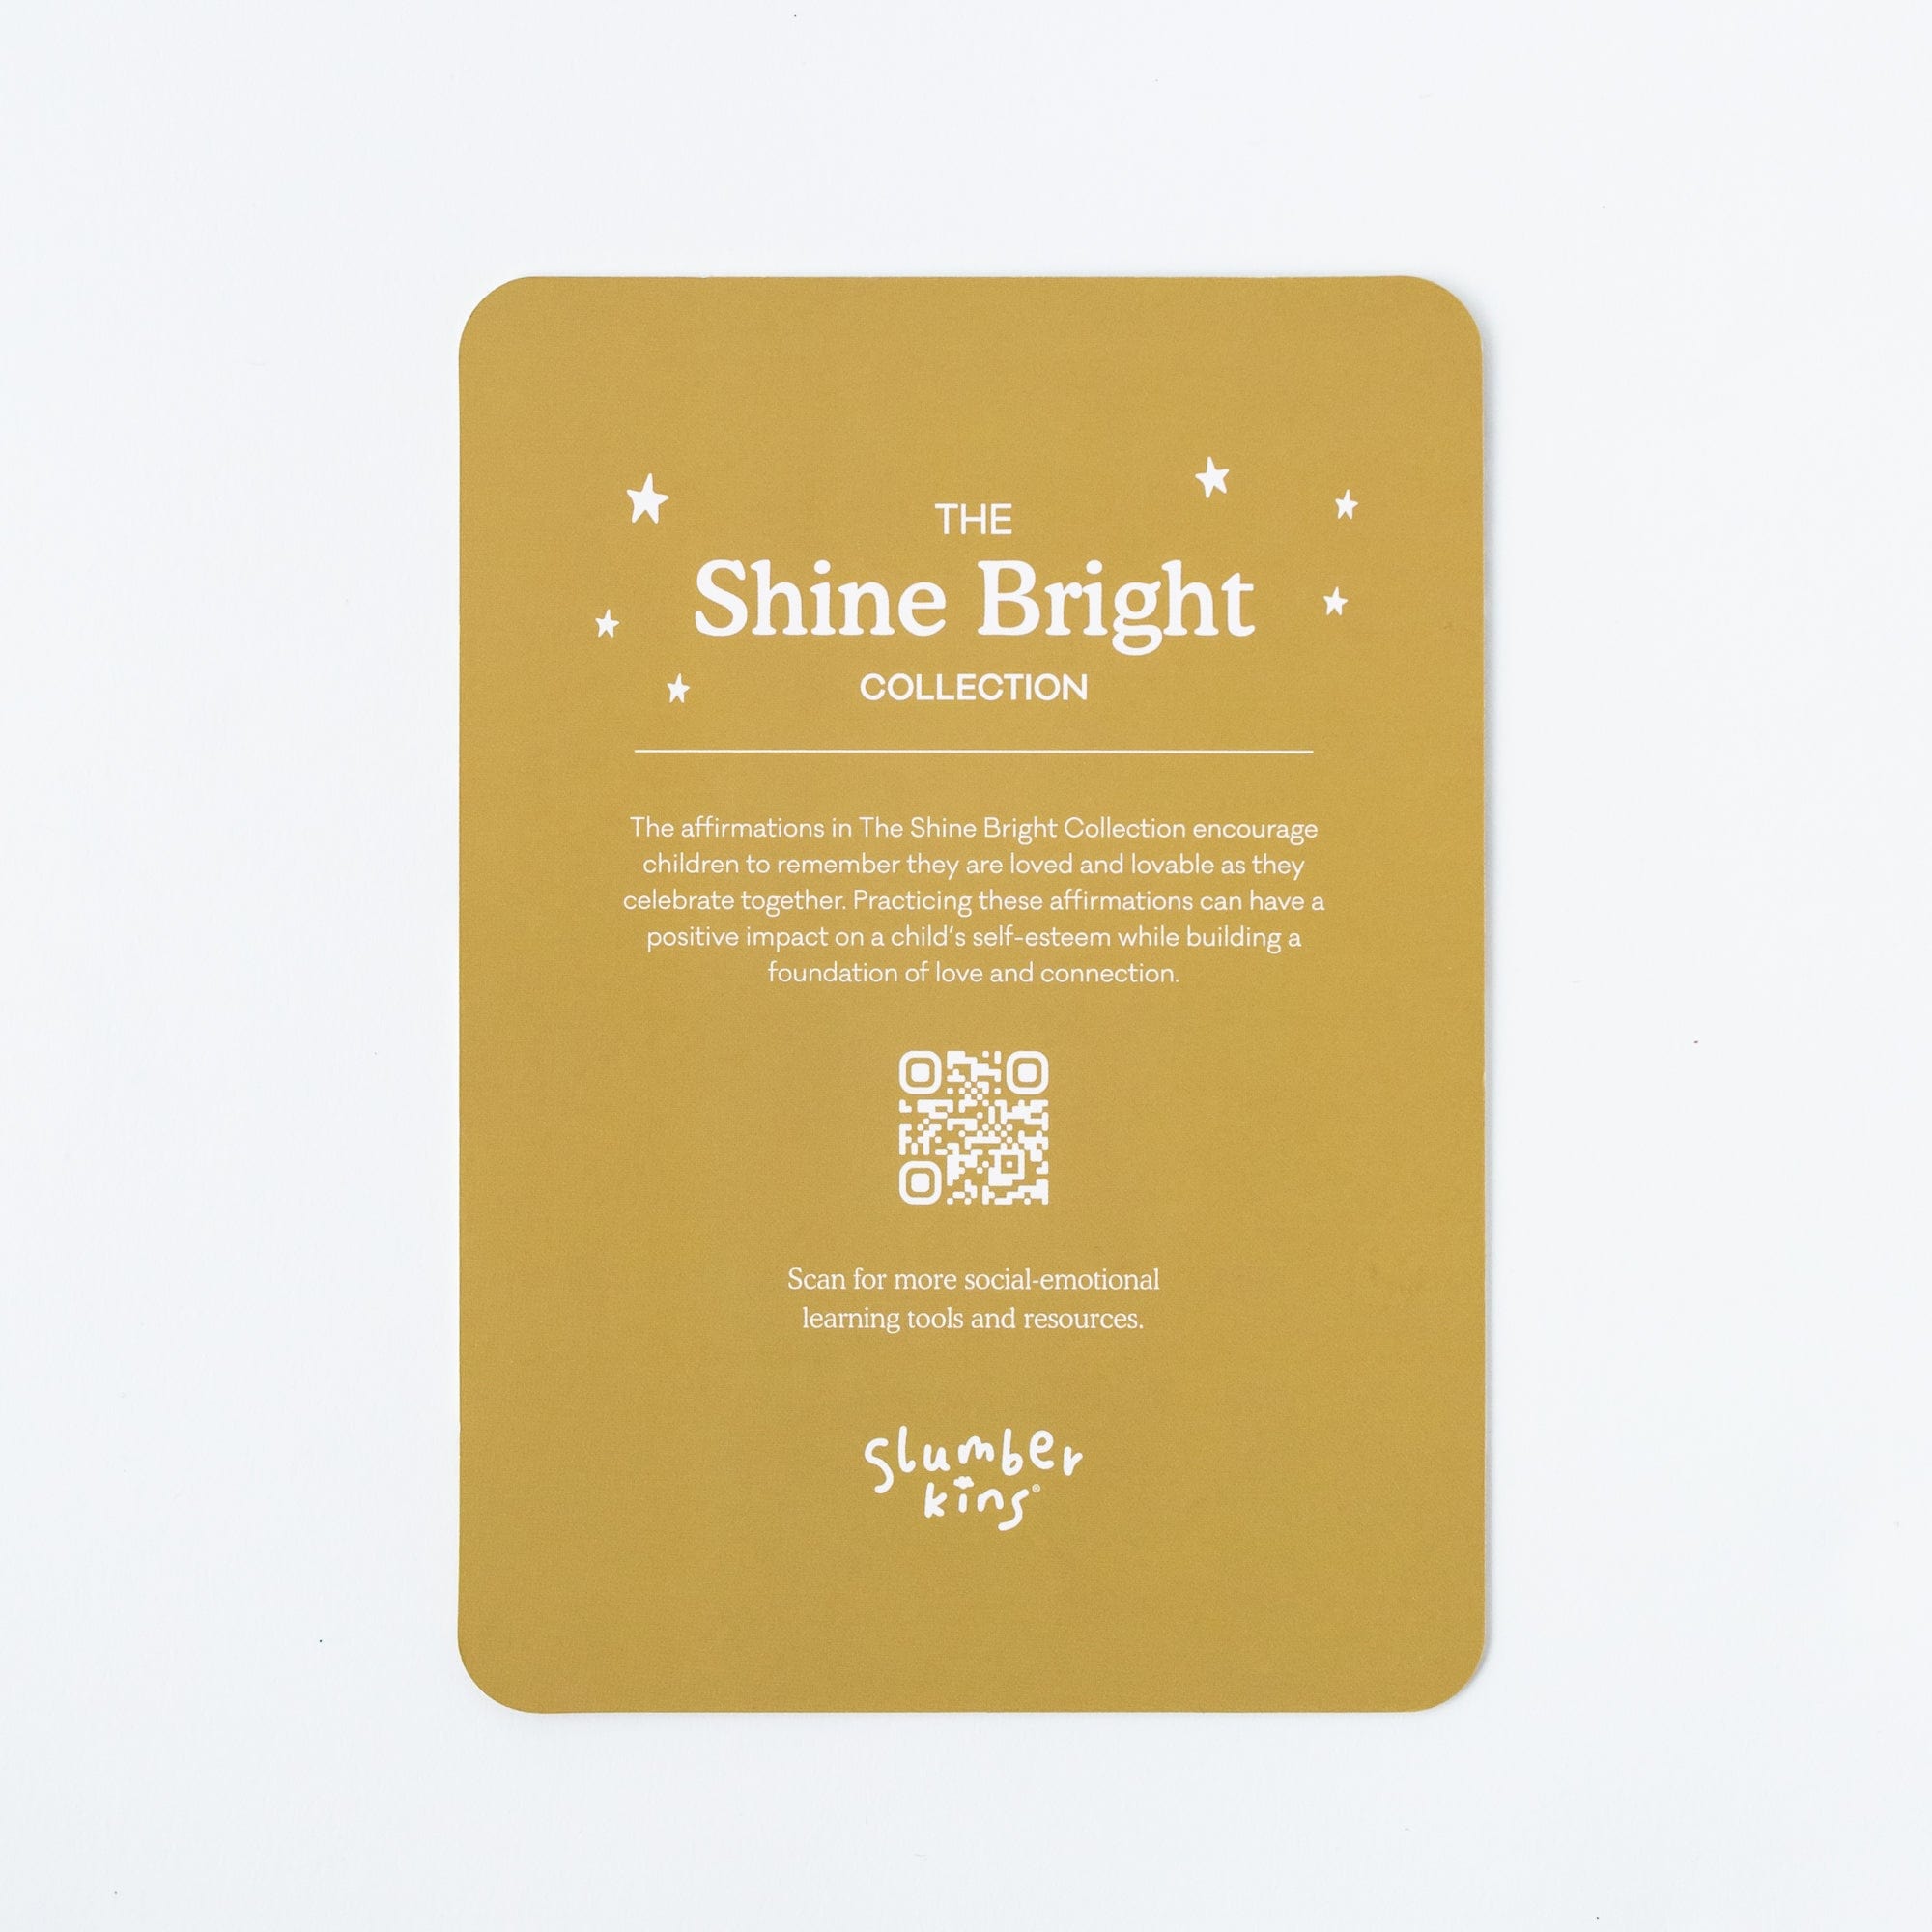 Shine Bright Ibex Kin Single - View Product